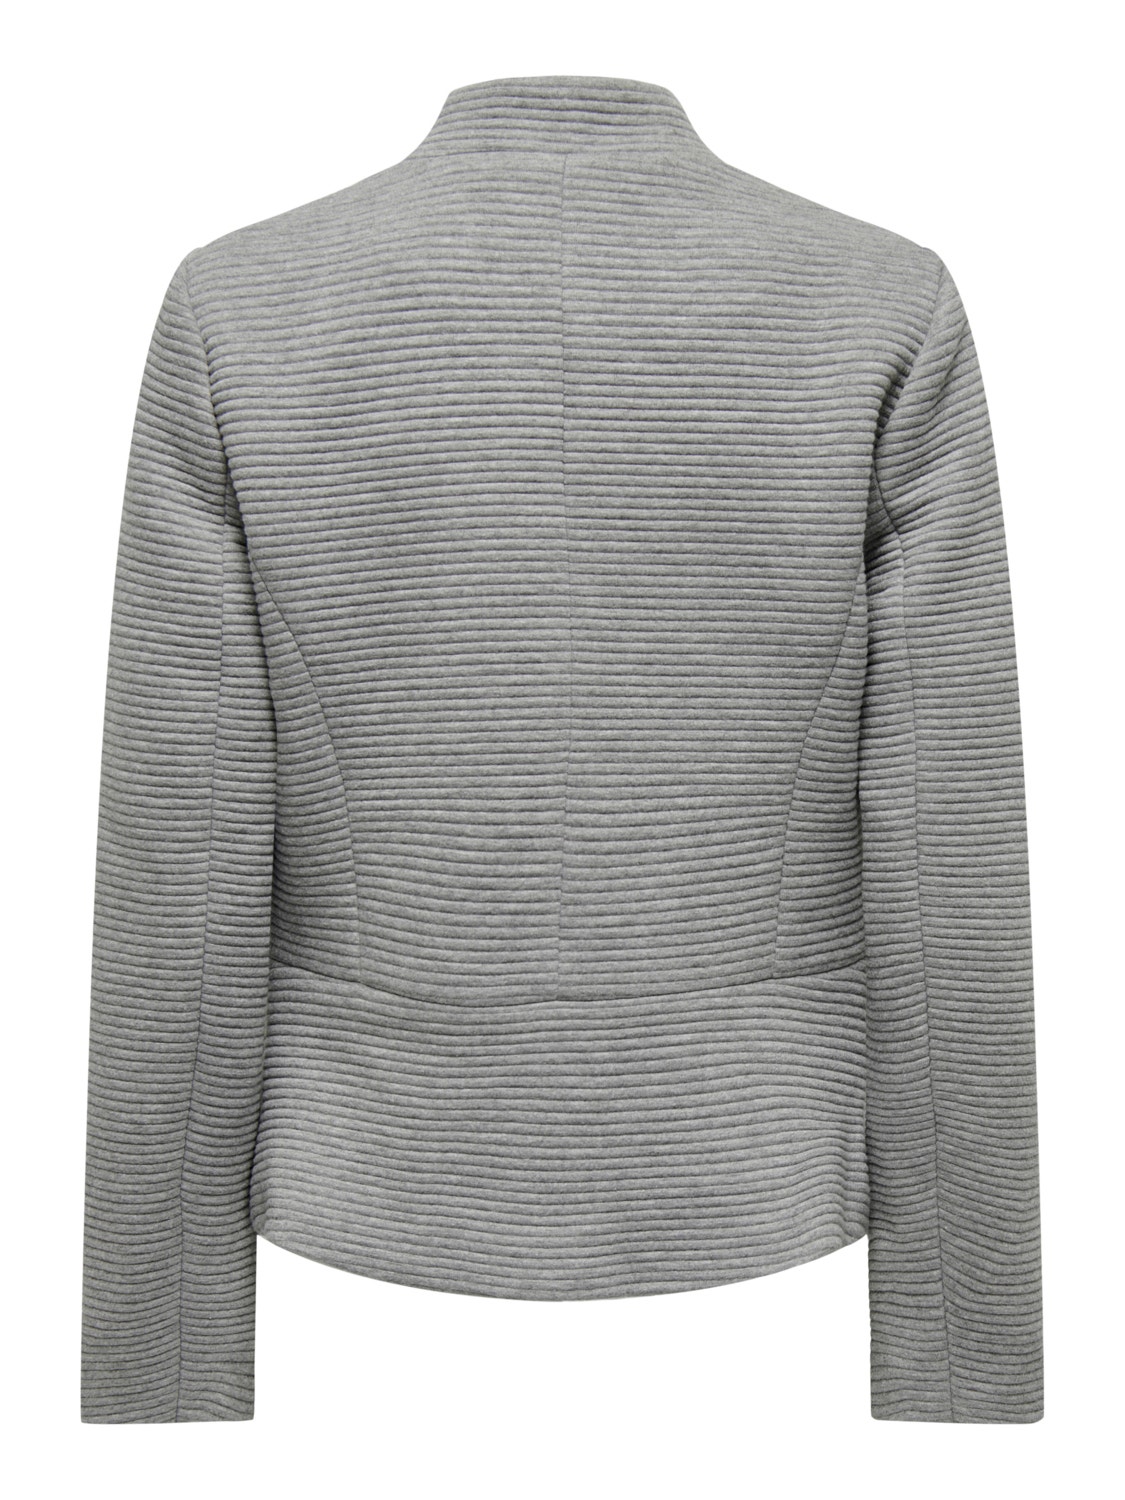 ONLY Short classic blazer -Medium Grey Melange - 15299119